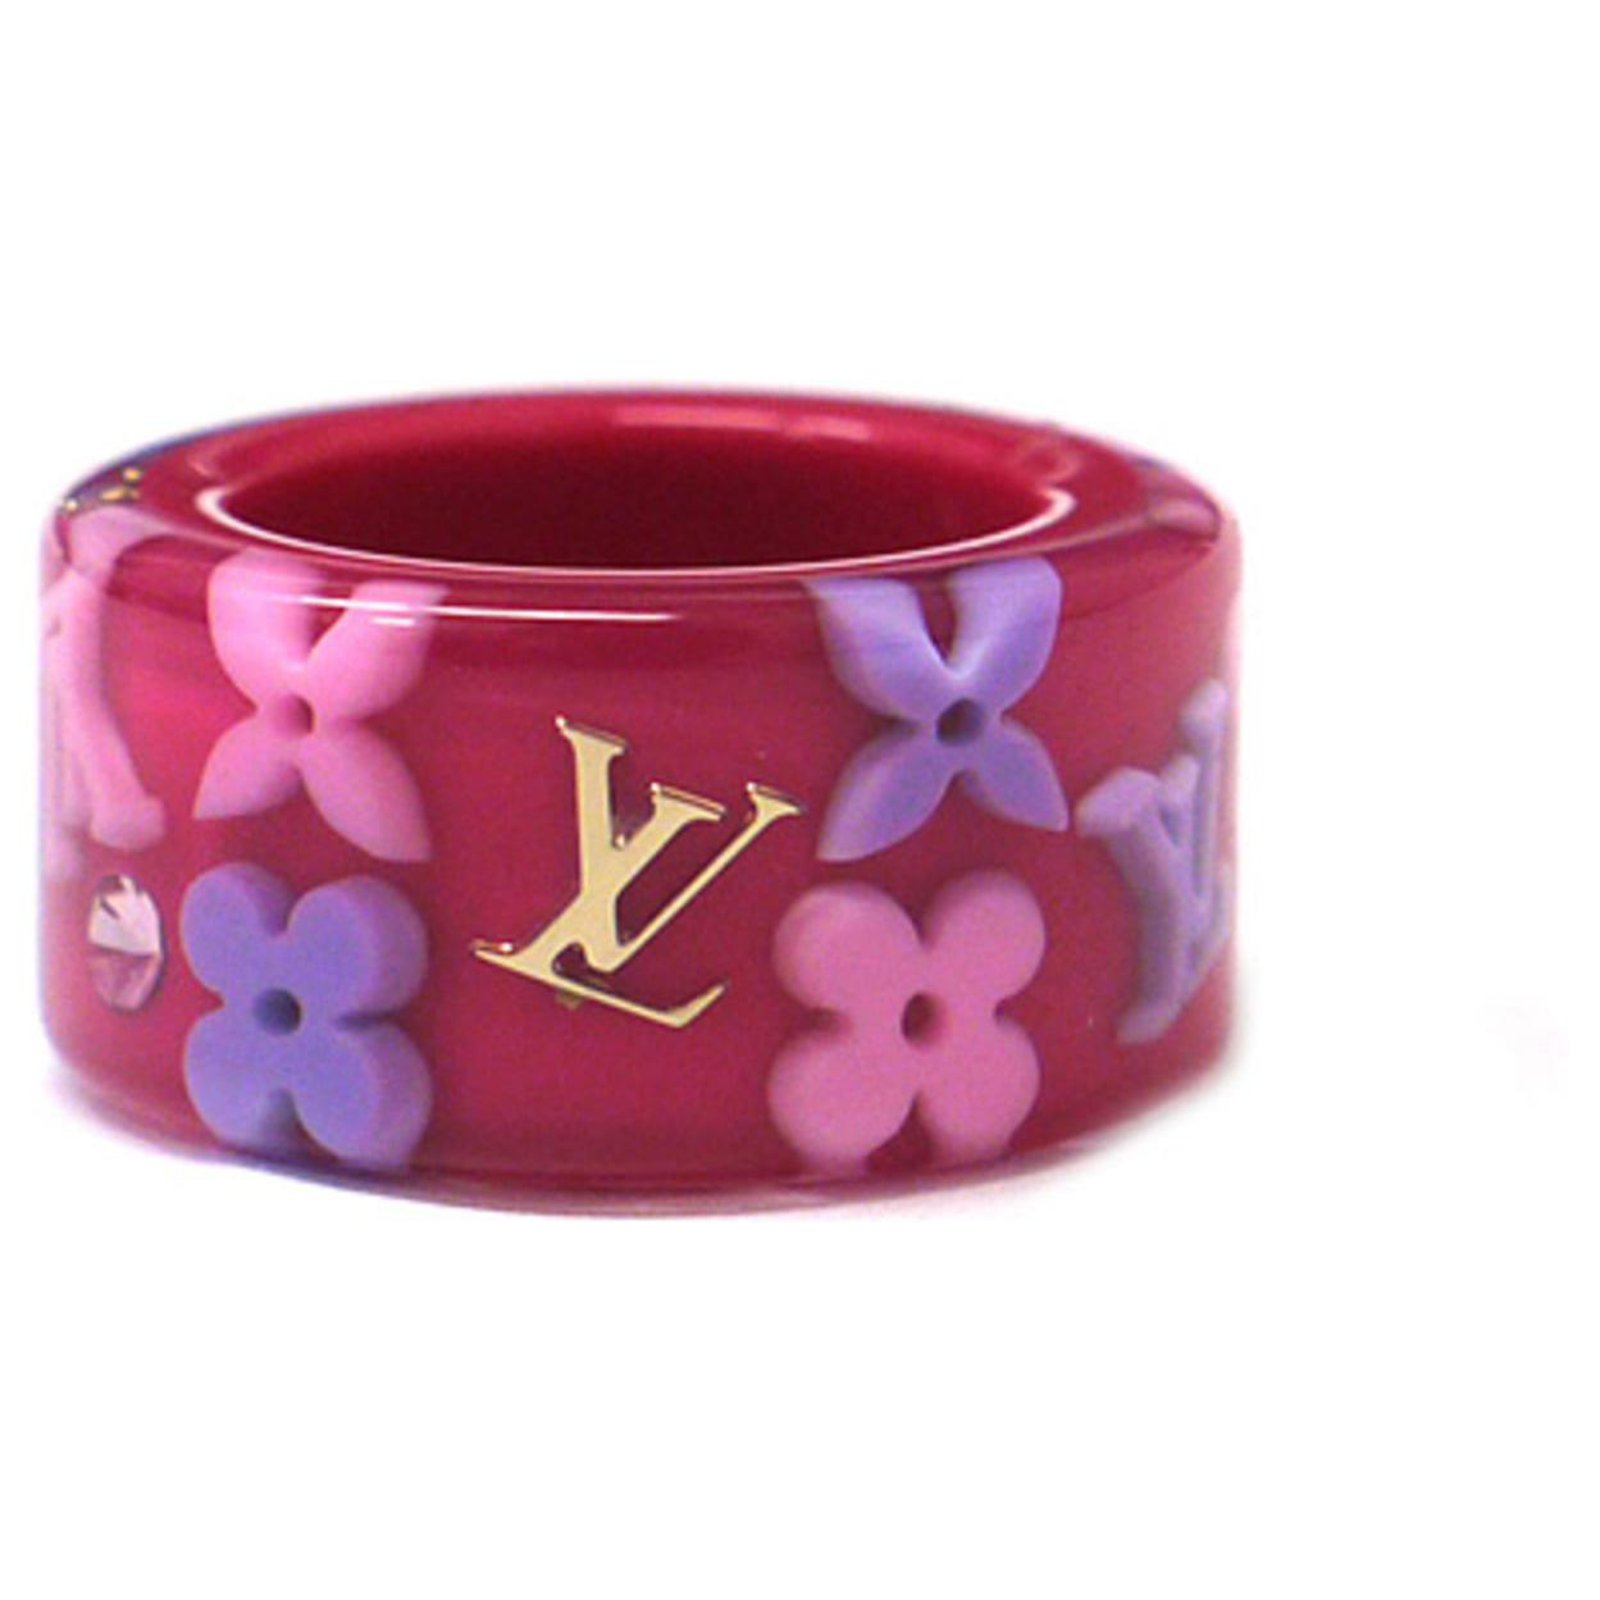 Louis Vuitton Inclusion Ring - Size 6